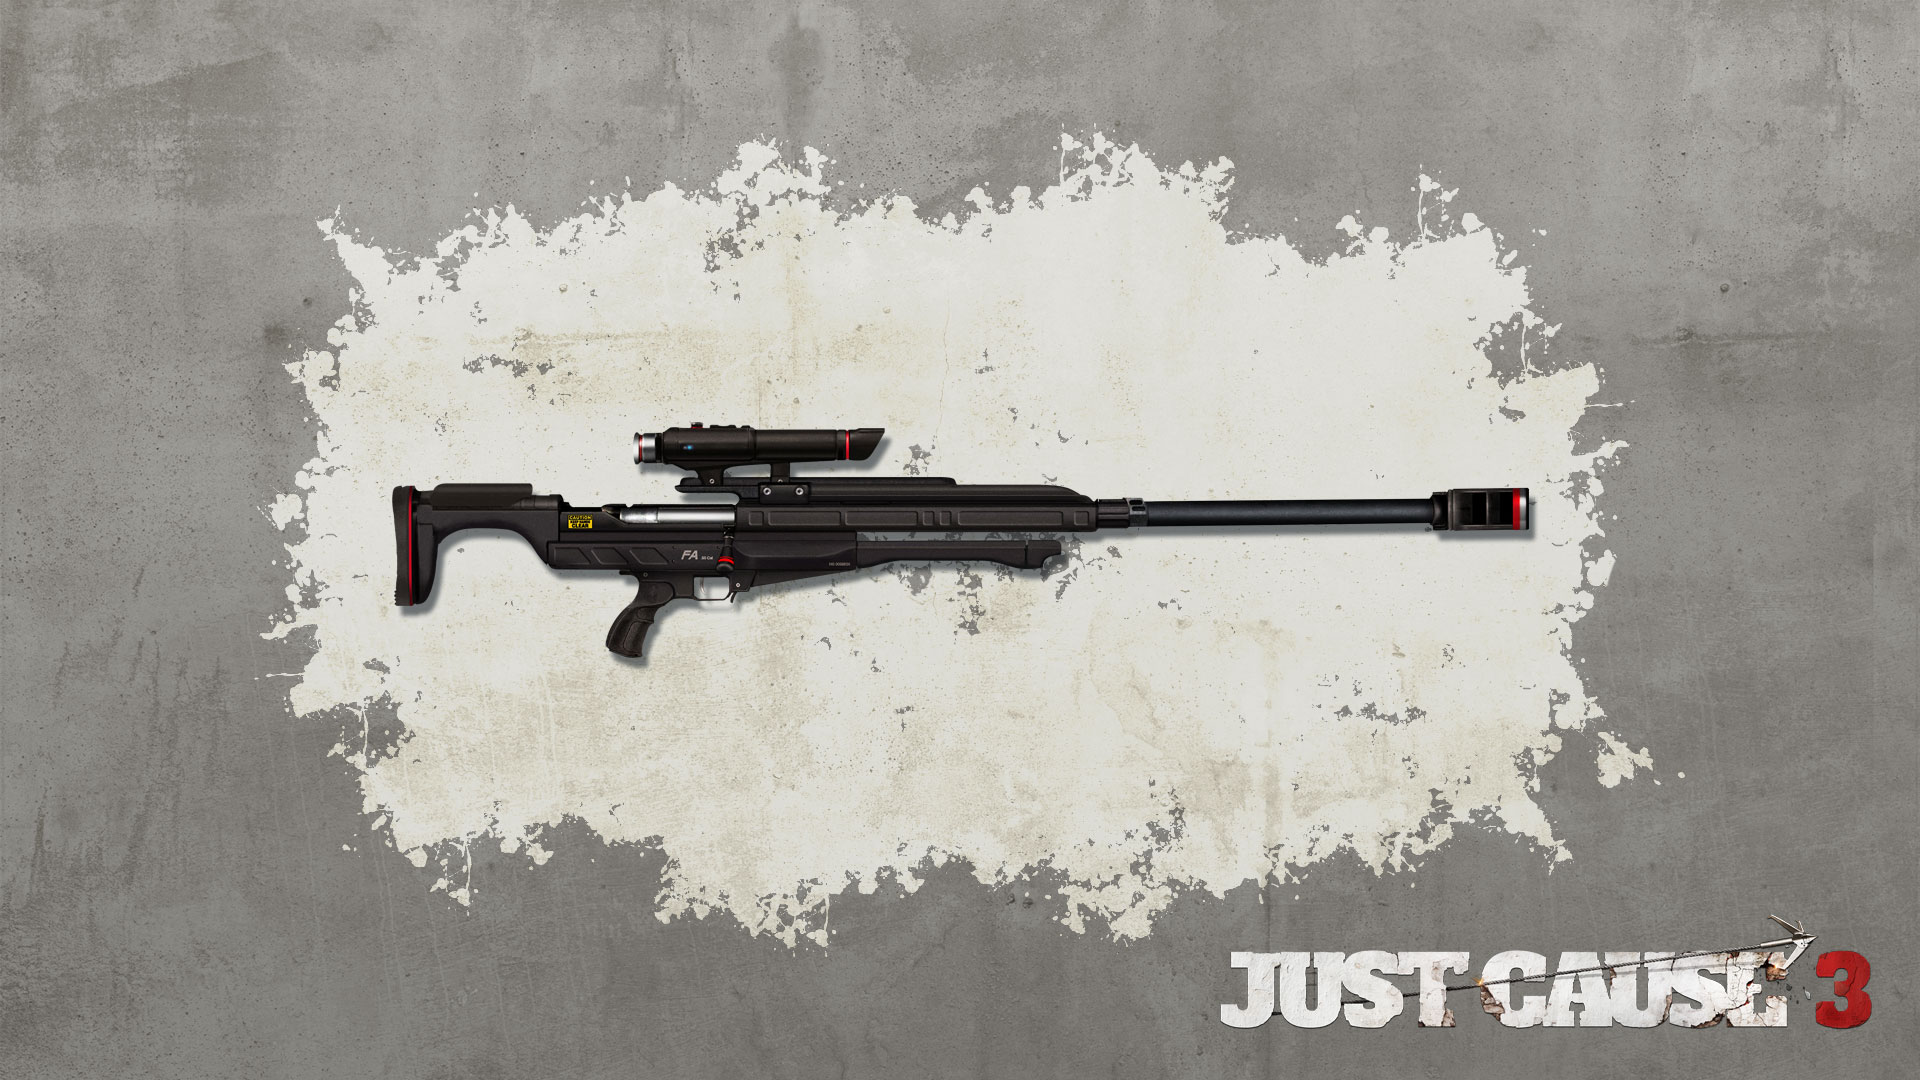 [$ 1.67] Just Cause 3 - Final Argument Sniper Rifle DLC Steam CD Key